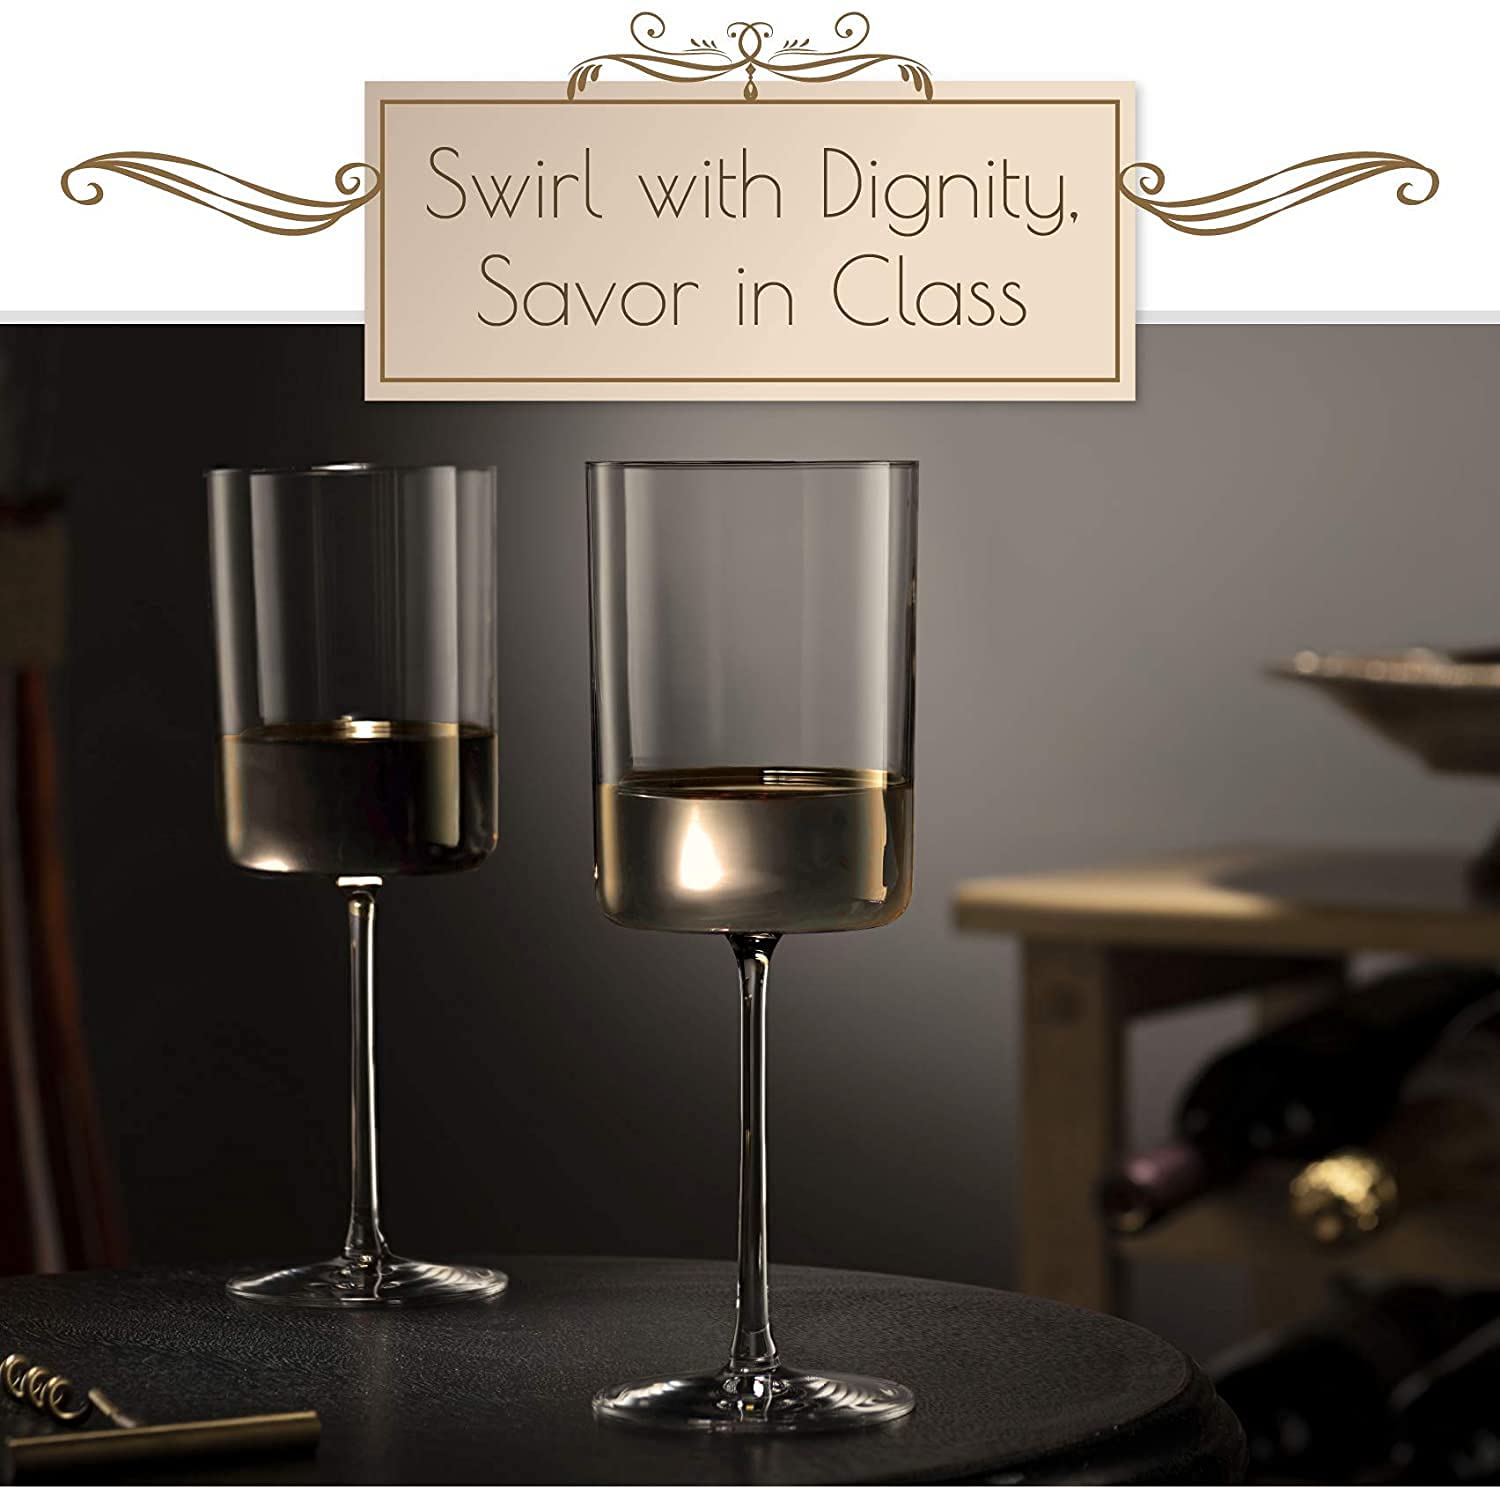 BENETI Square Wine Glasses  - Good